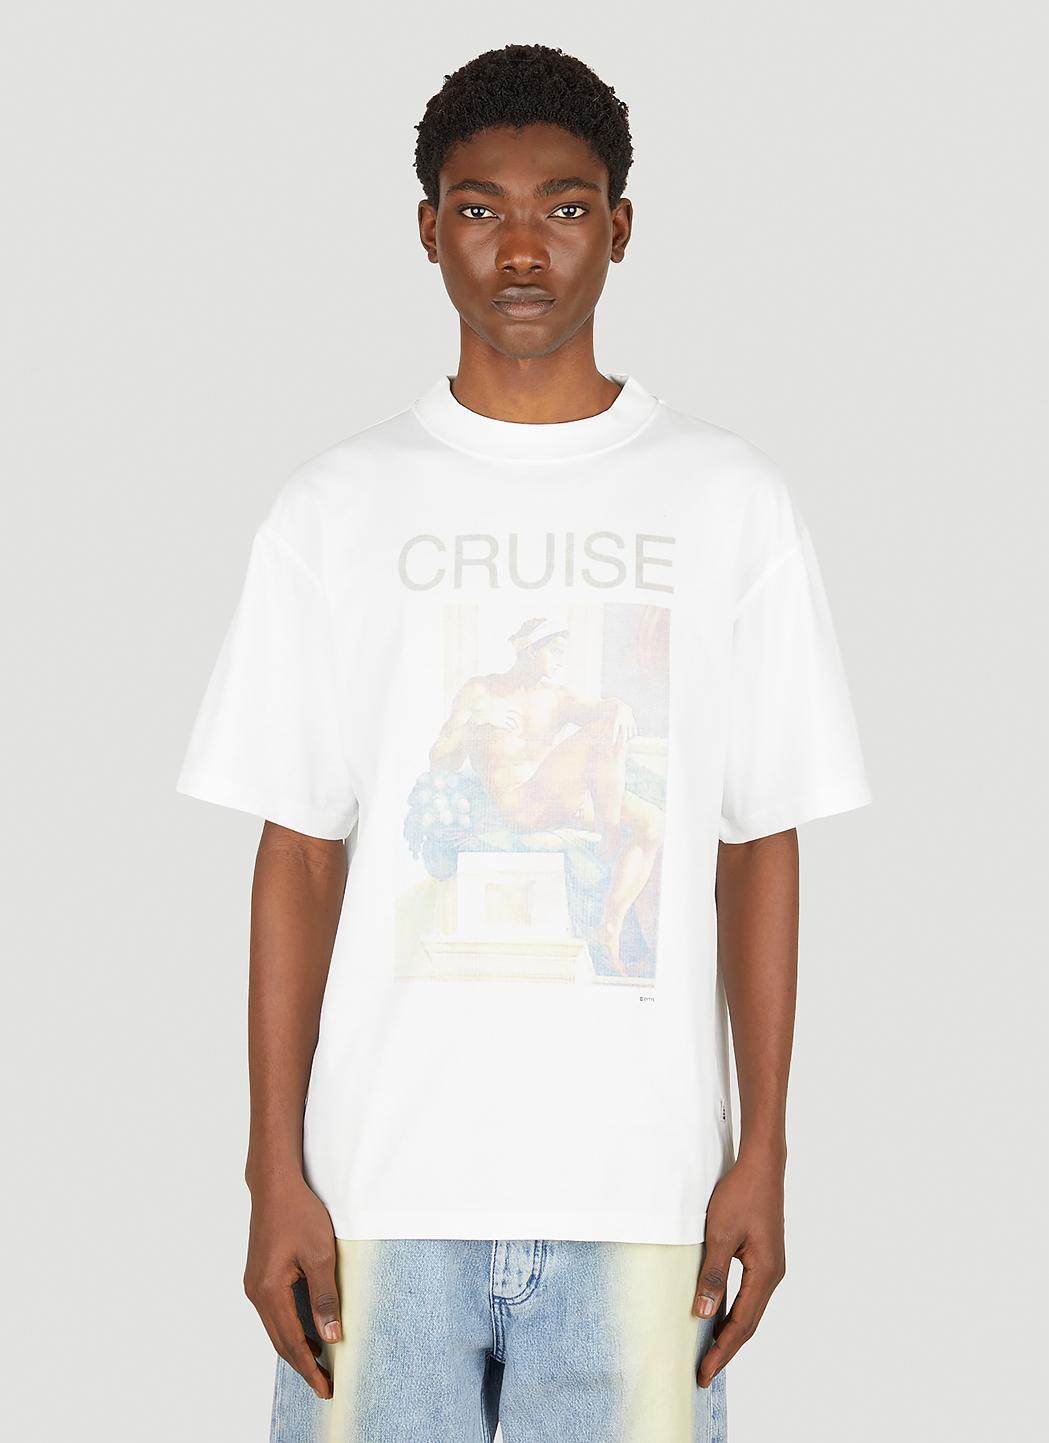 Ferris Cruise T-Shirt